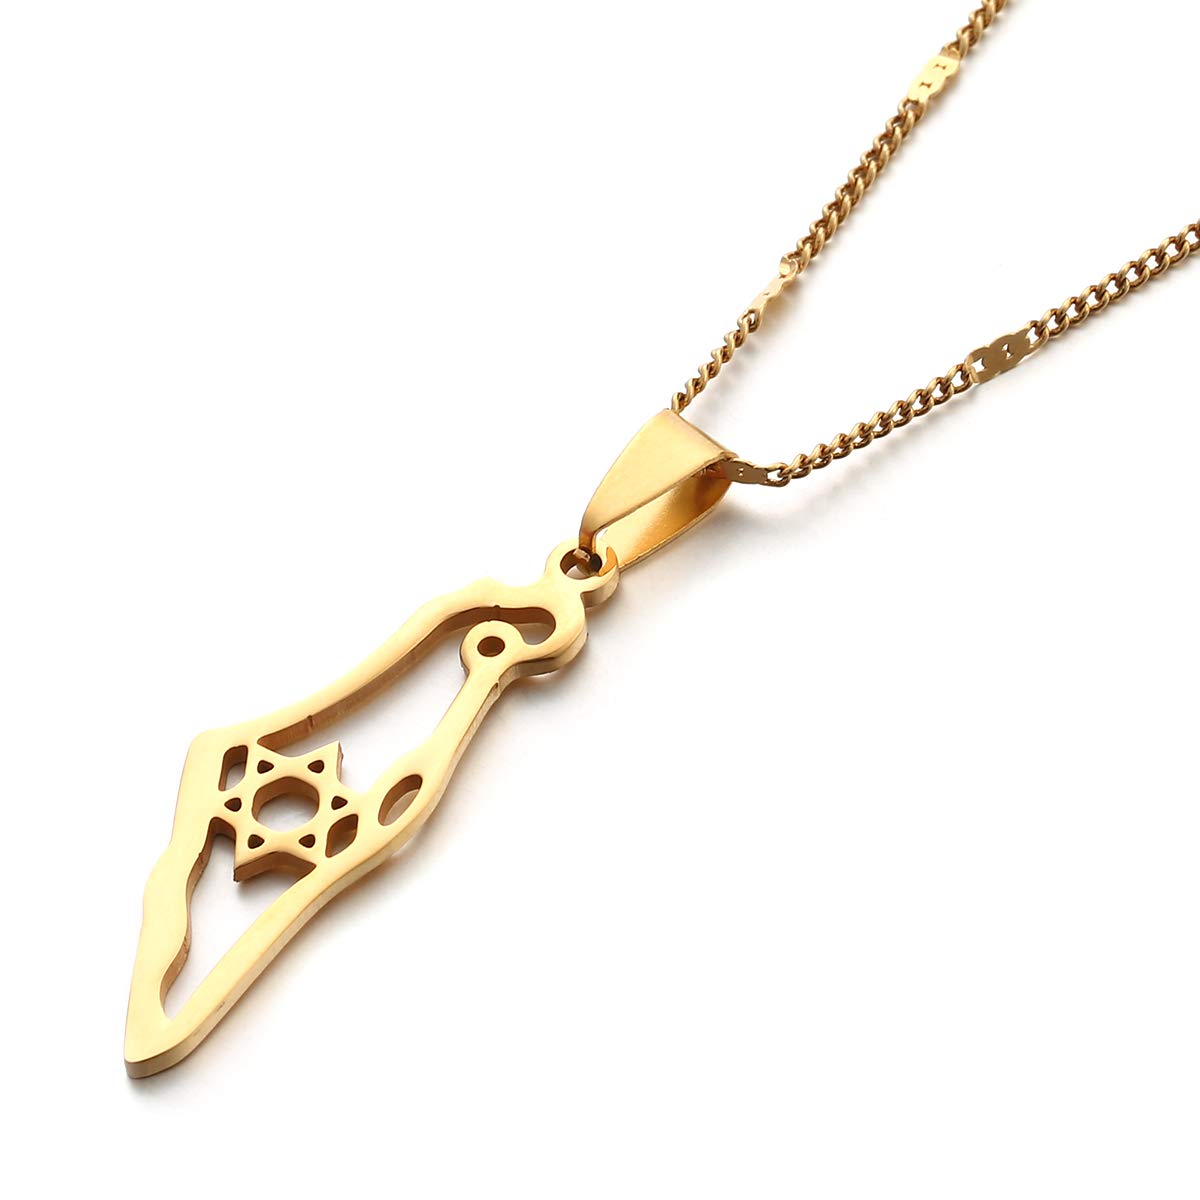 Stainless Steel Israel Map Pendant Necklace Hexagram Magen David Jewelry Star of David Jewish Jewelry